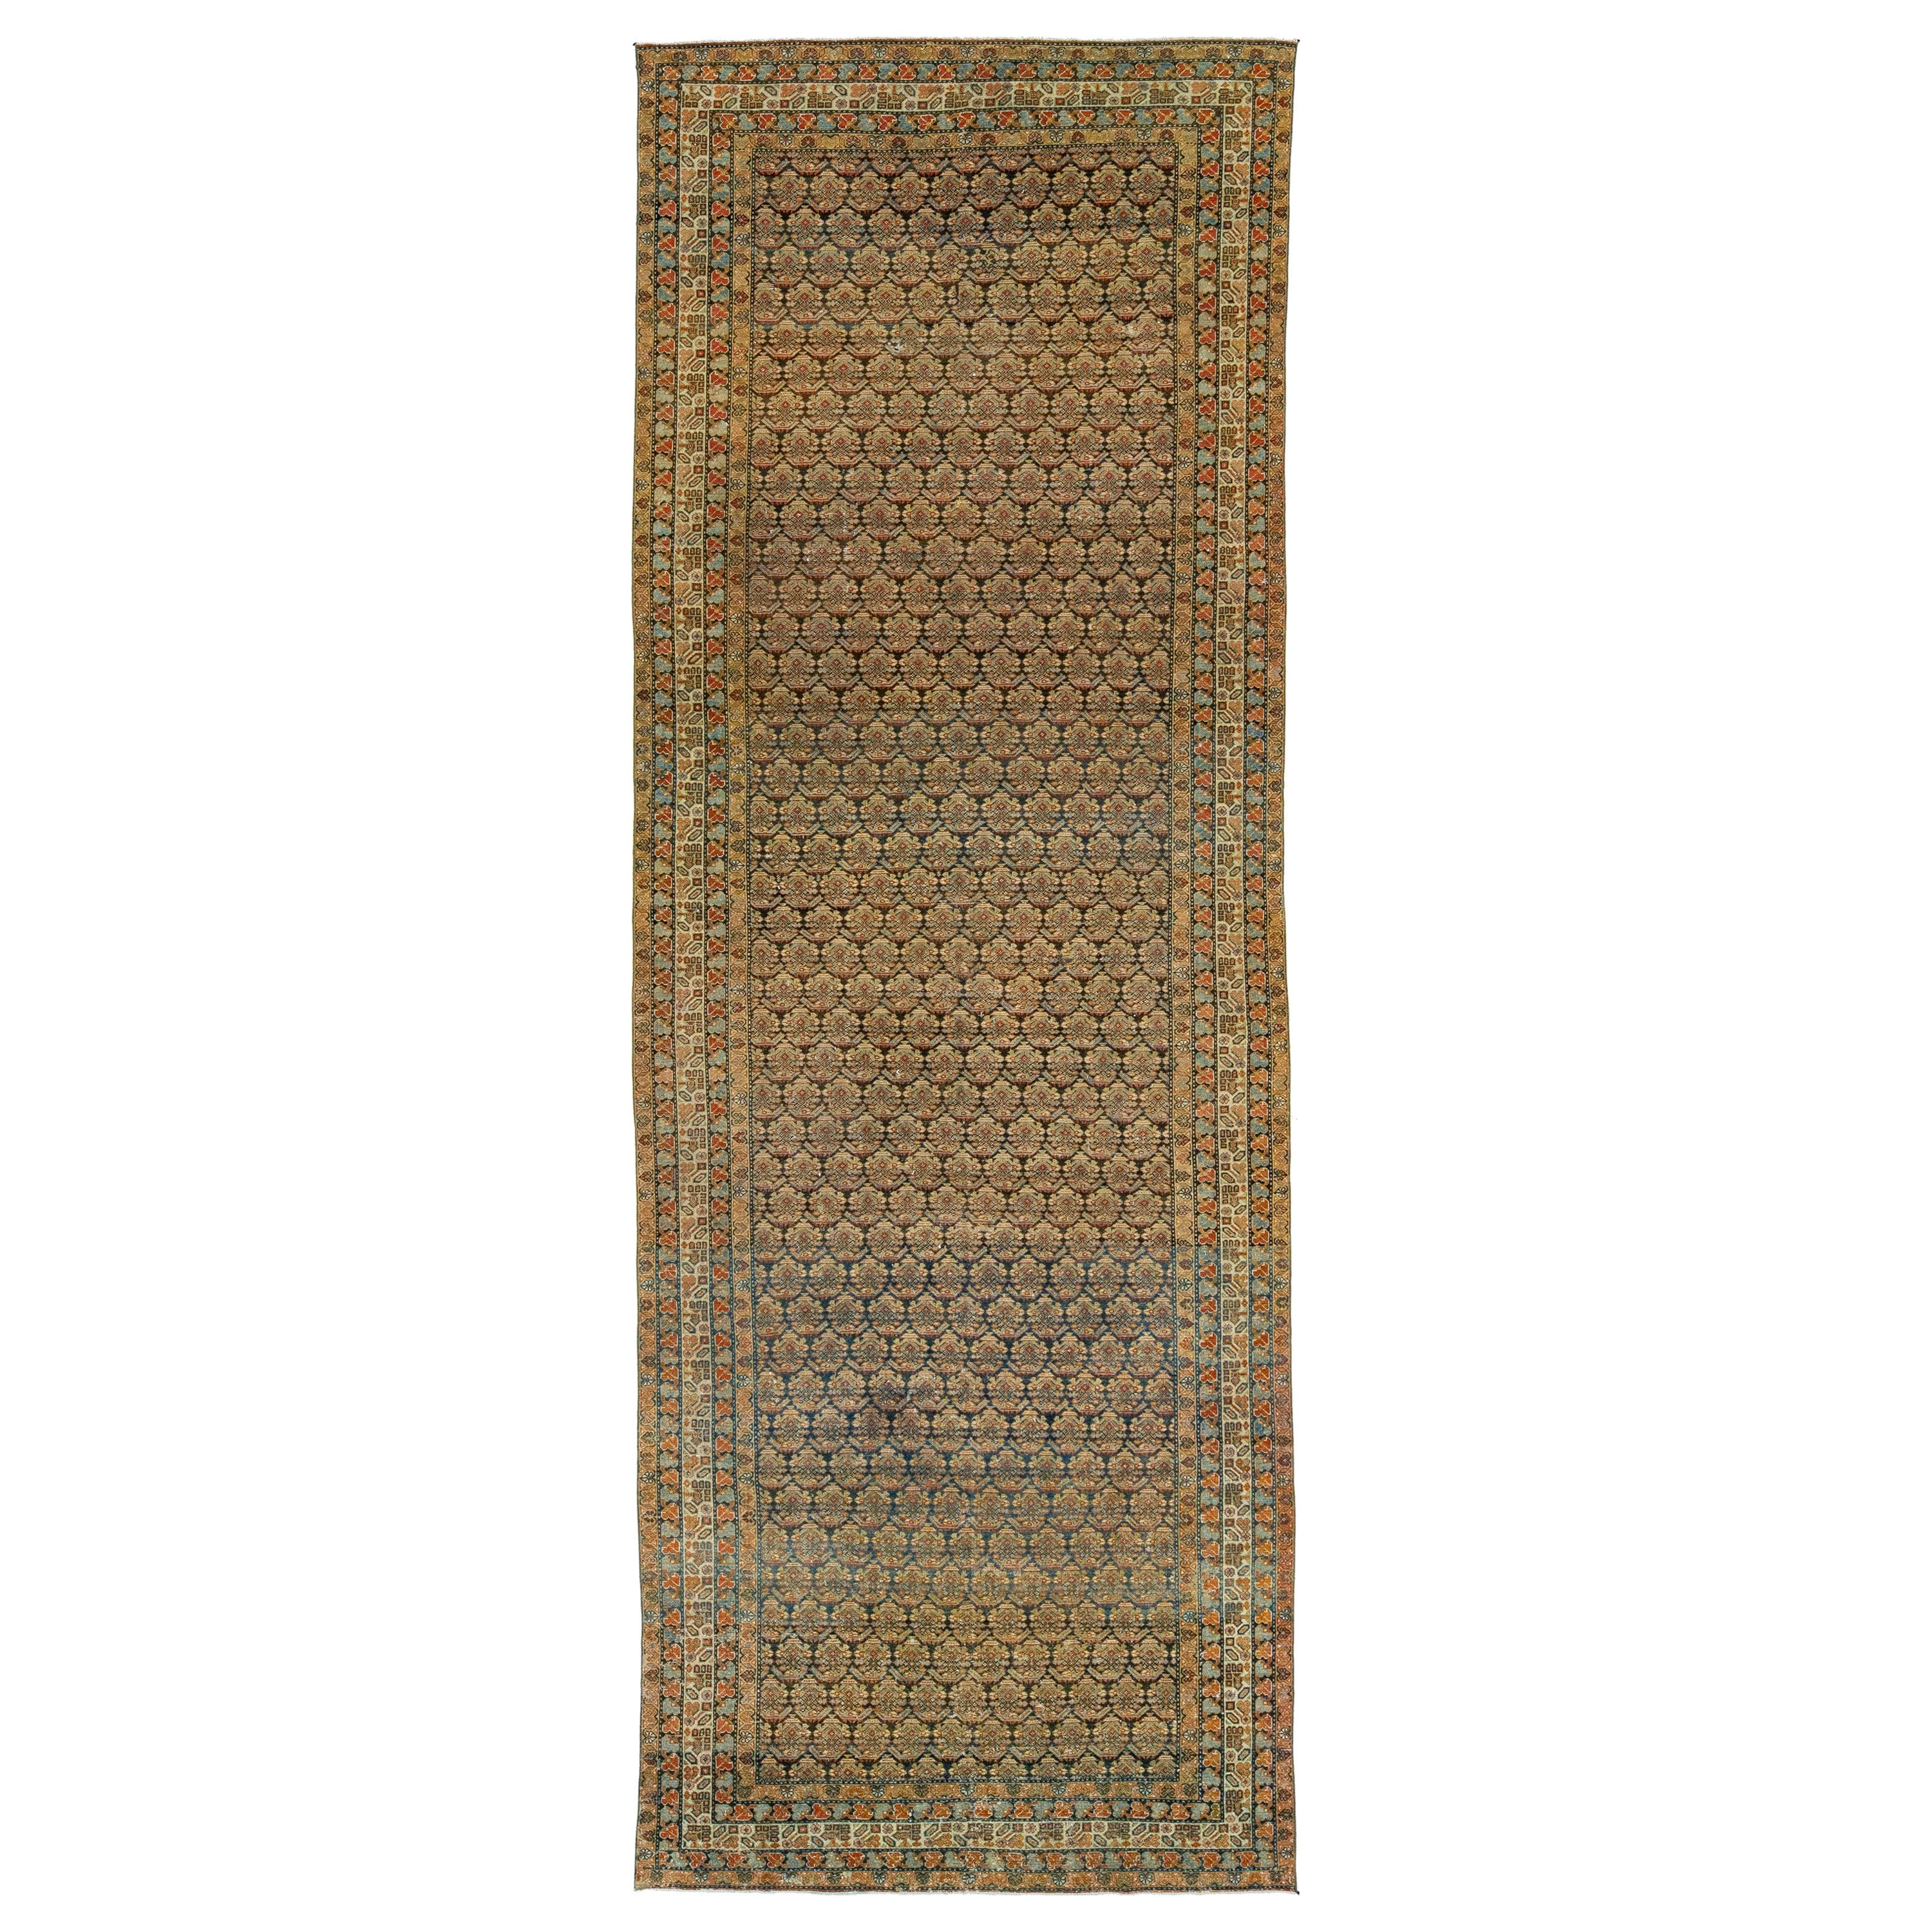 Brown Handmade Antique Persian Malayer Wool Rug with Allover Pattern (Tapis de laine perse à motifs variés)